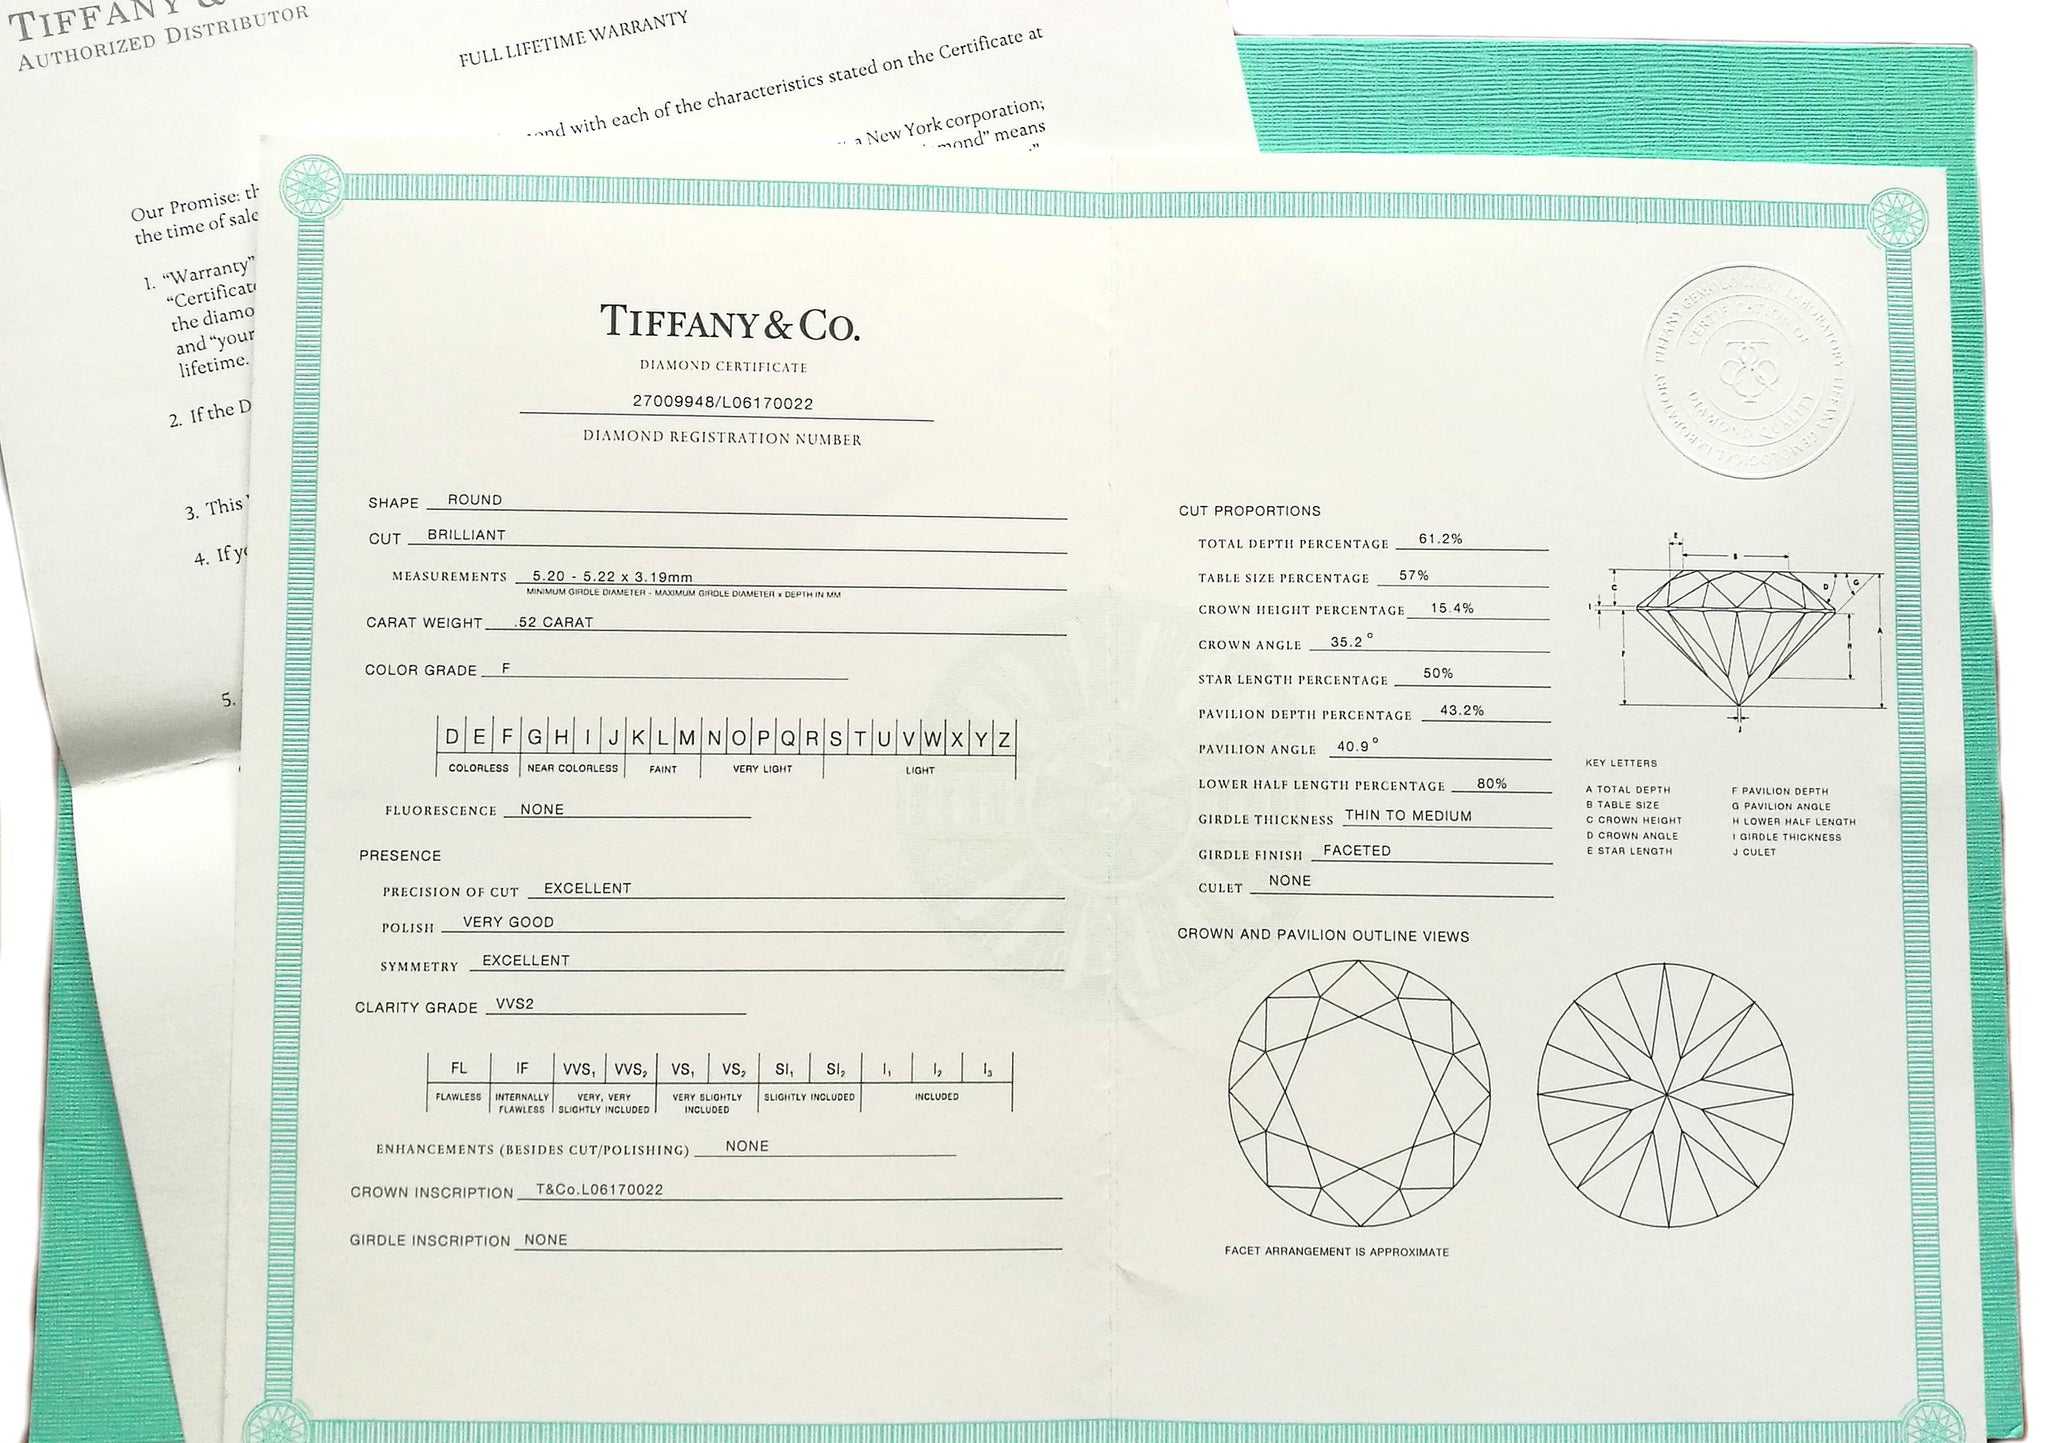 tiffany diamond certificate